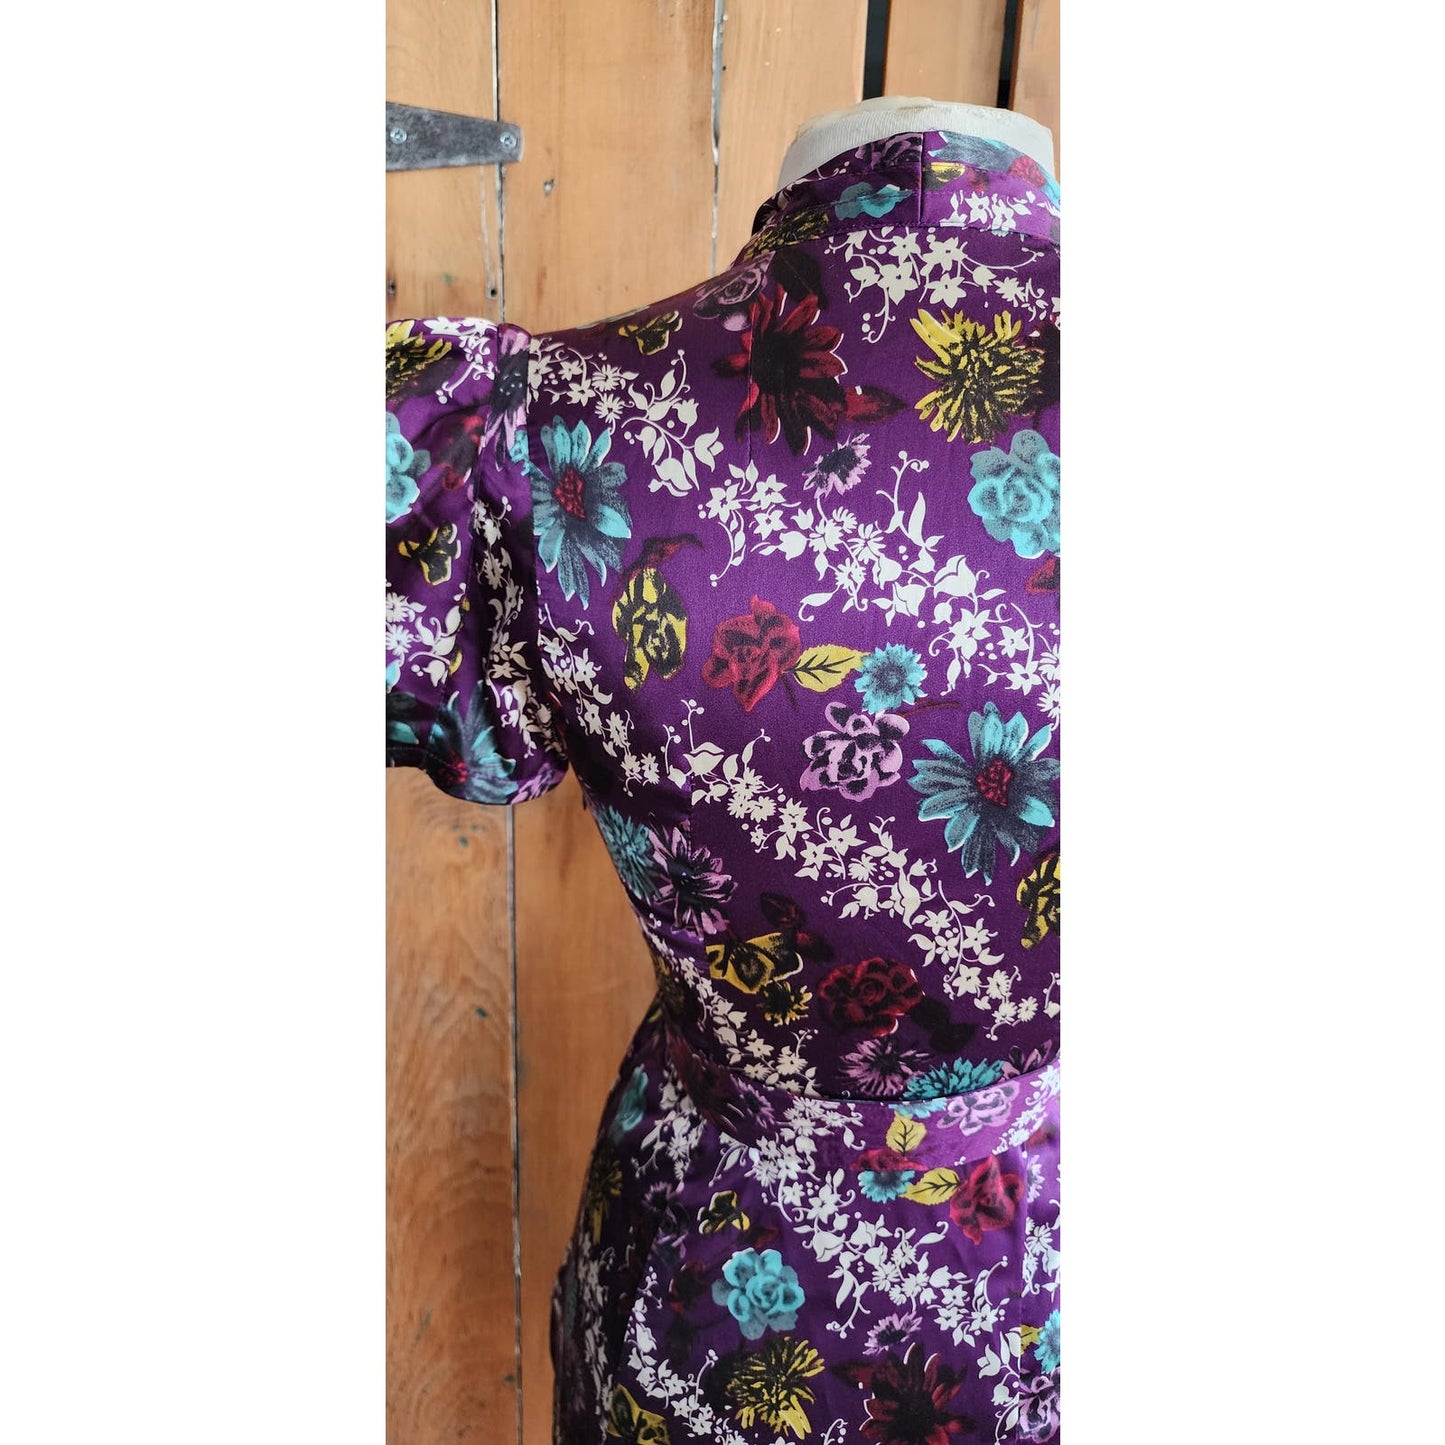 Vintage Betsey Johnson Purple Dress Floral Silkprint Puffed Sleeves